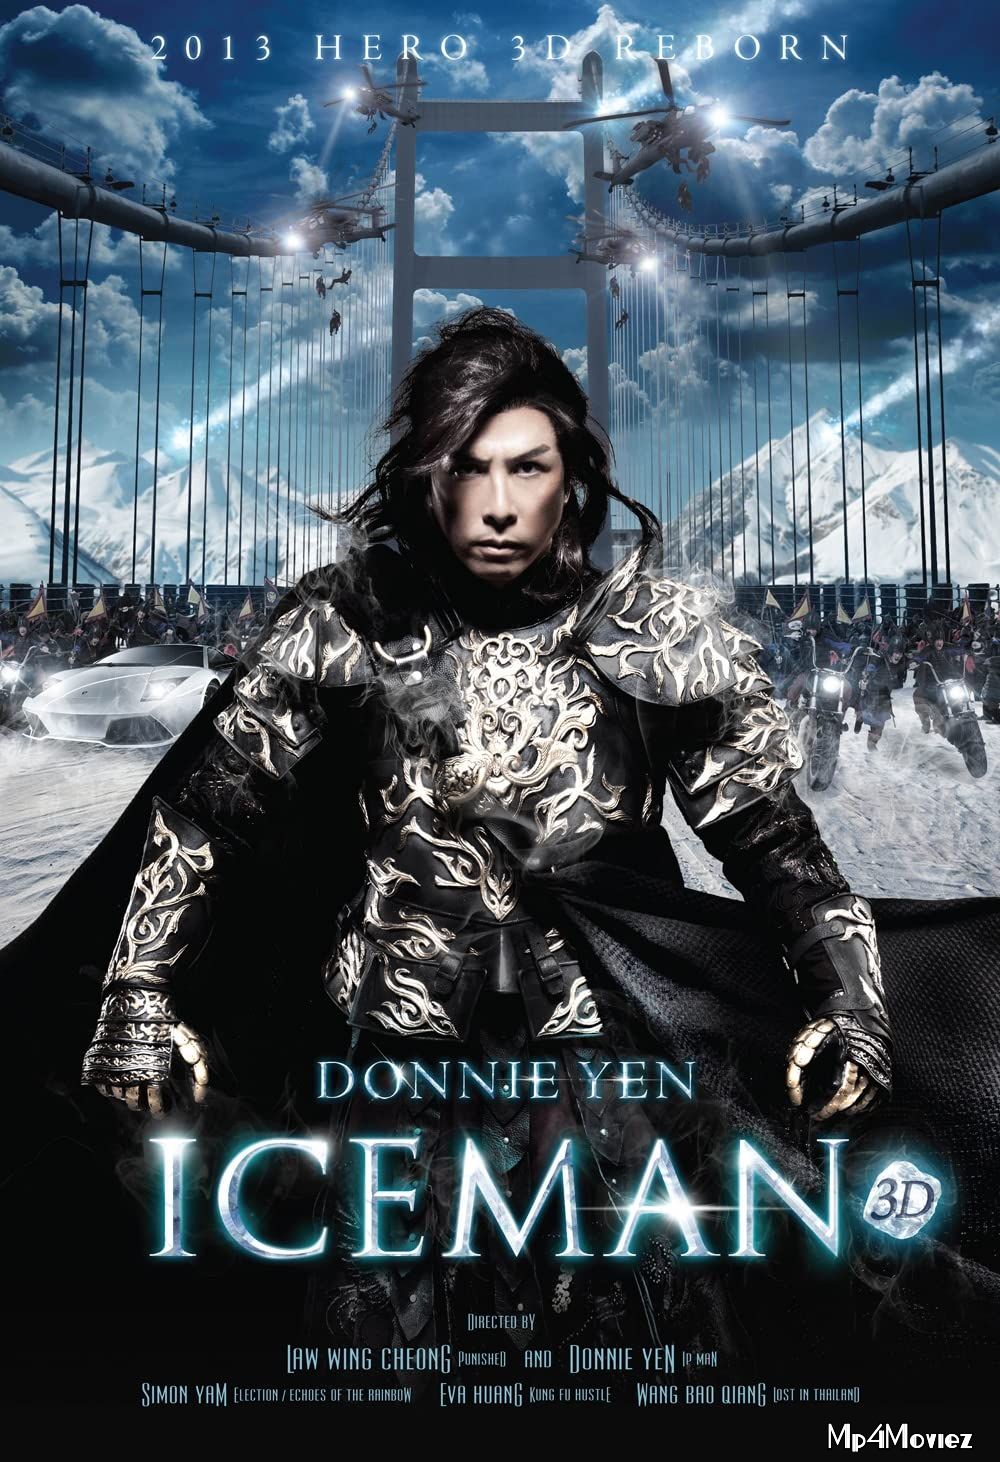 Iceman 2014 Hindi Dubbed Movie download full movie